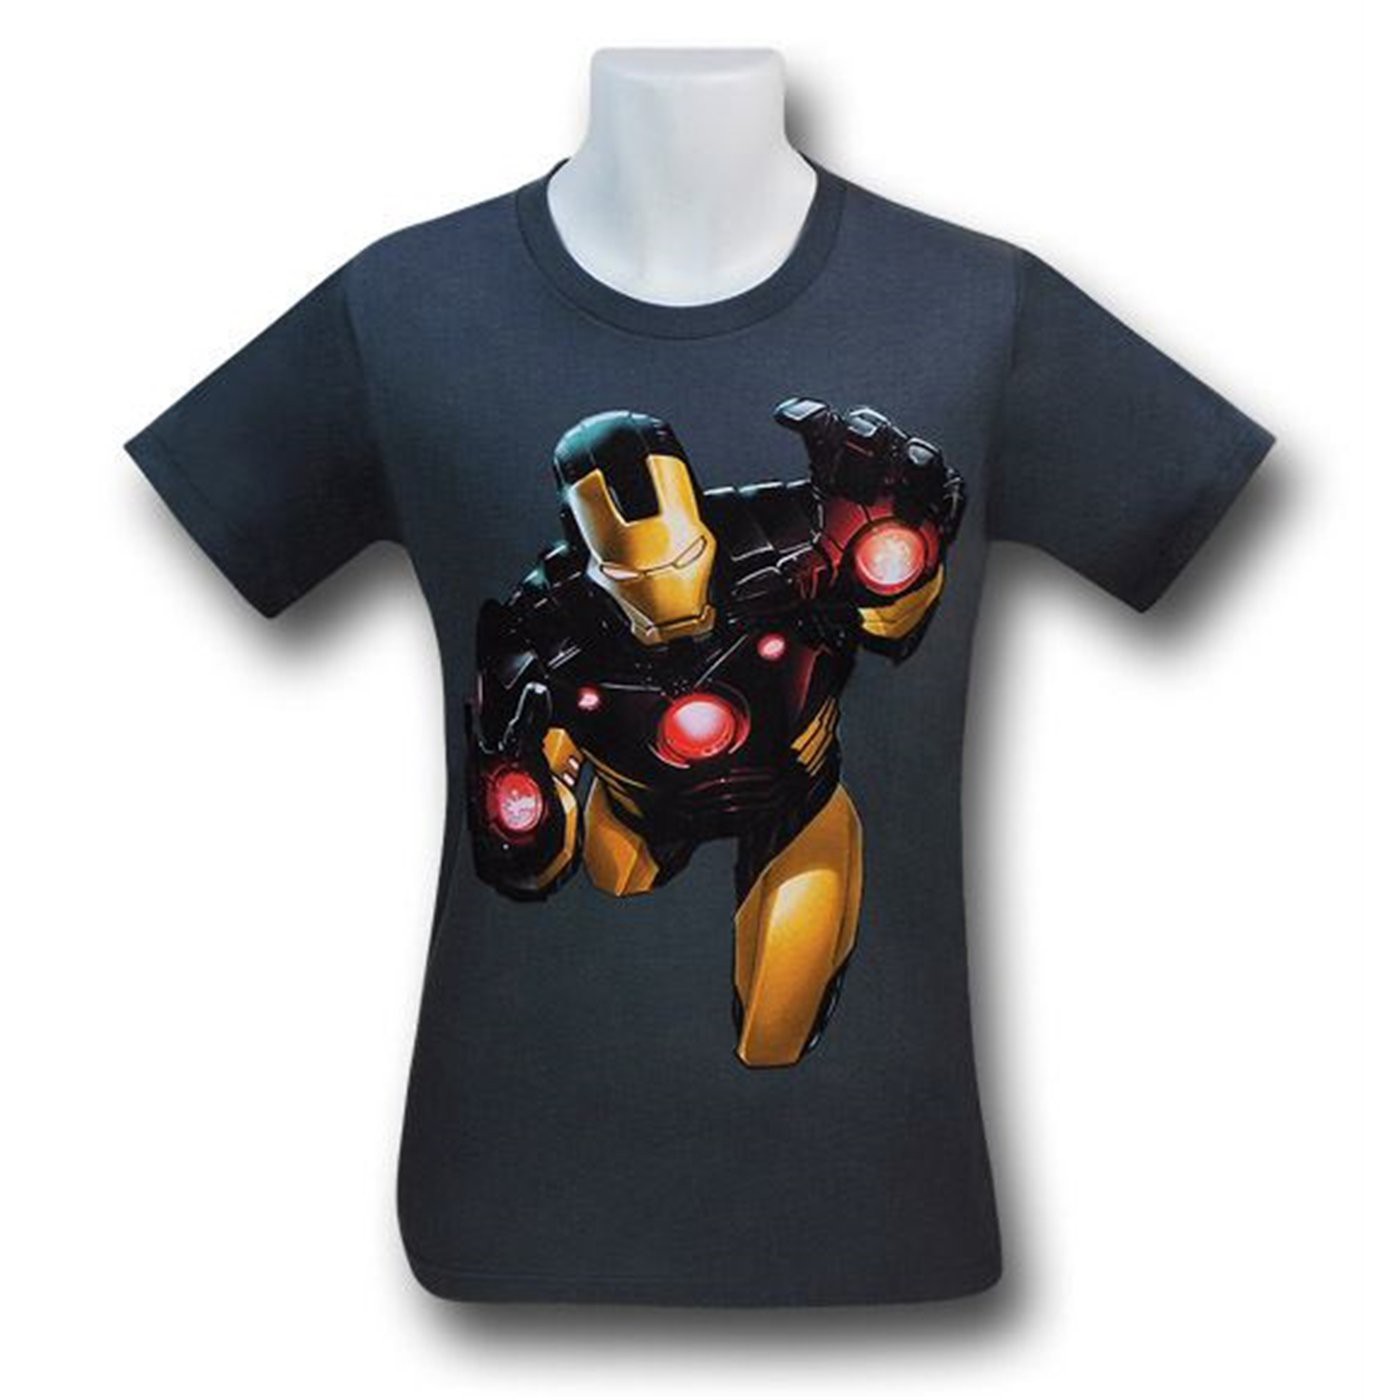 Iron Man Black And Yellow Suit 30 Single T-Shirt